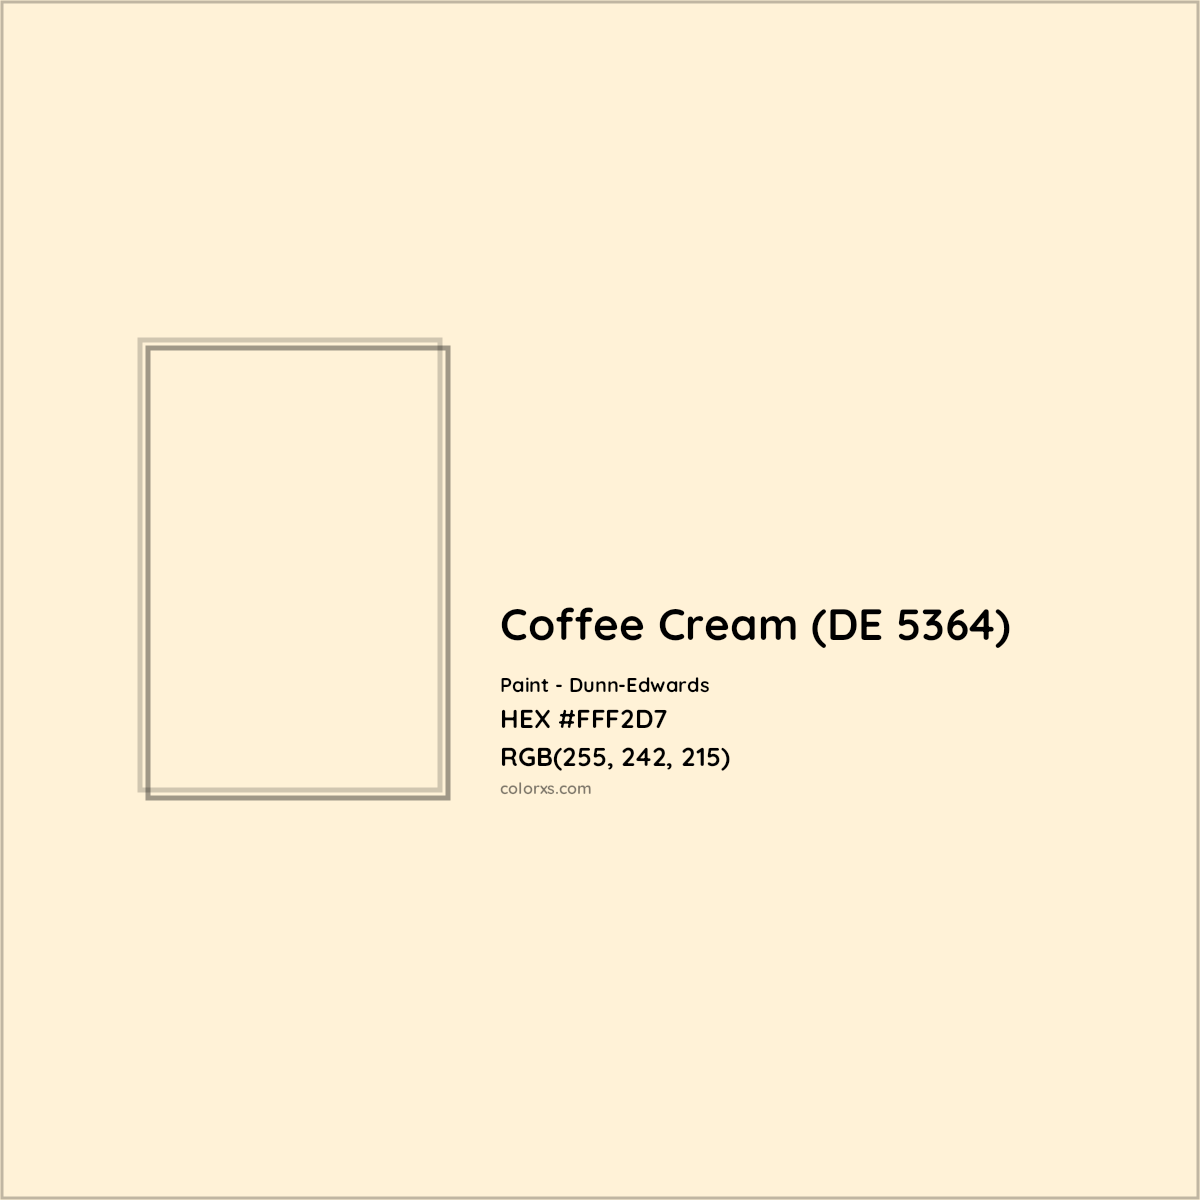 HEX #FFF2D7 Coffee Cream (DE 5364) Paint Dunn-Edwards - Color Code